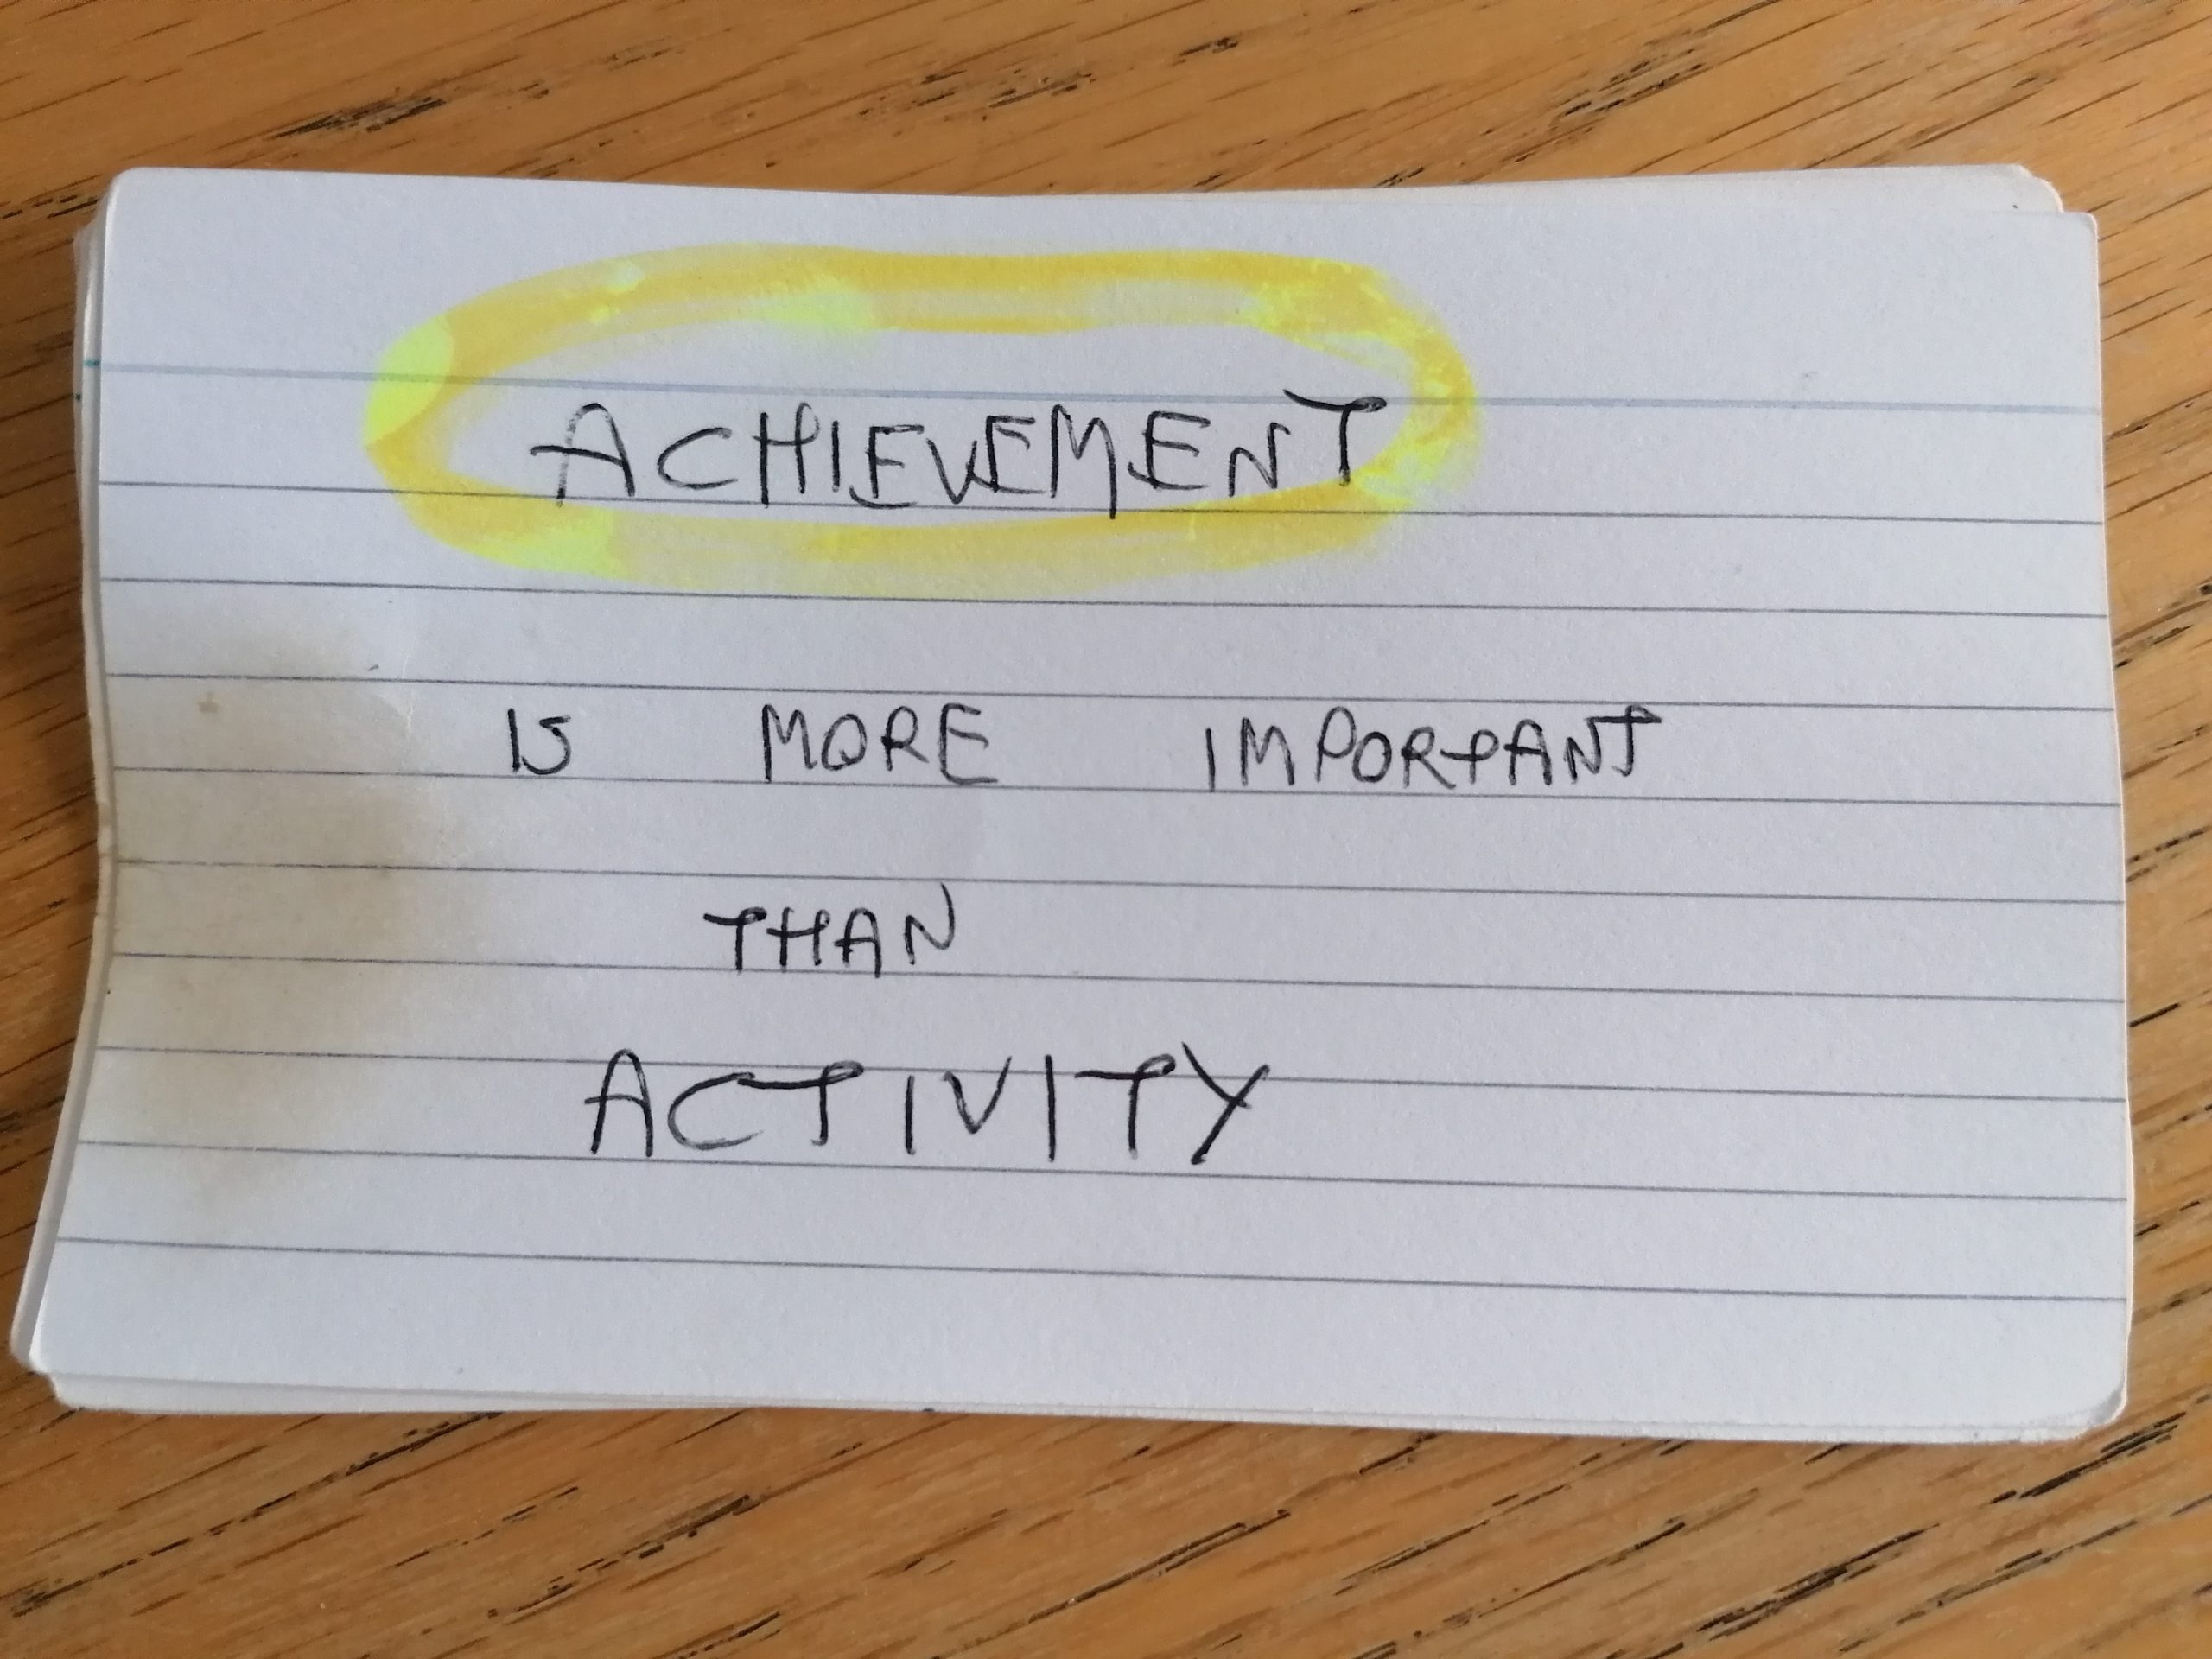 Achievement is more important than activity